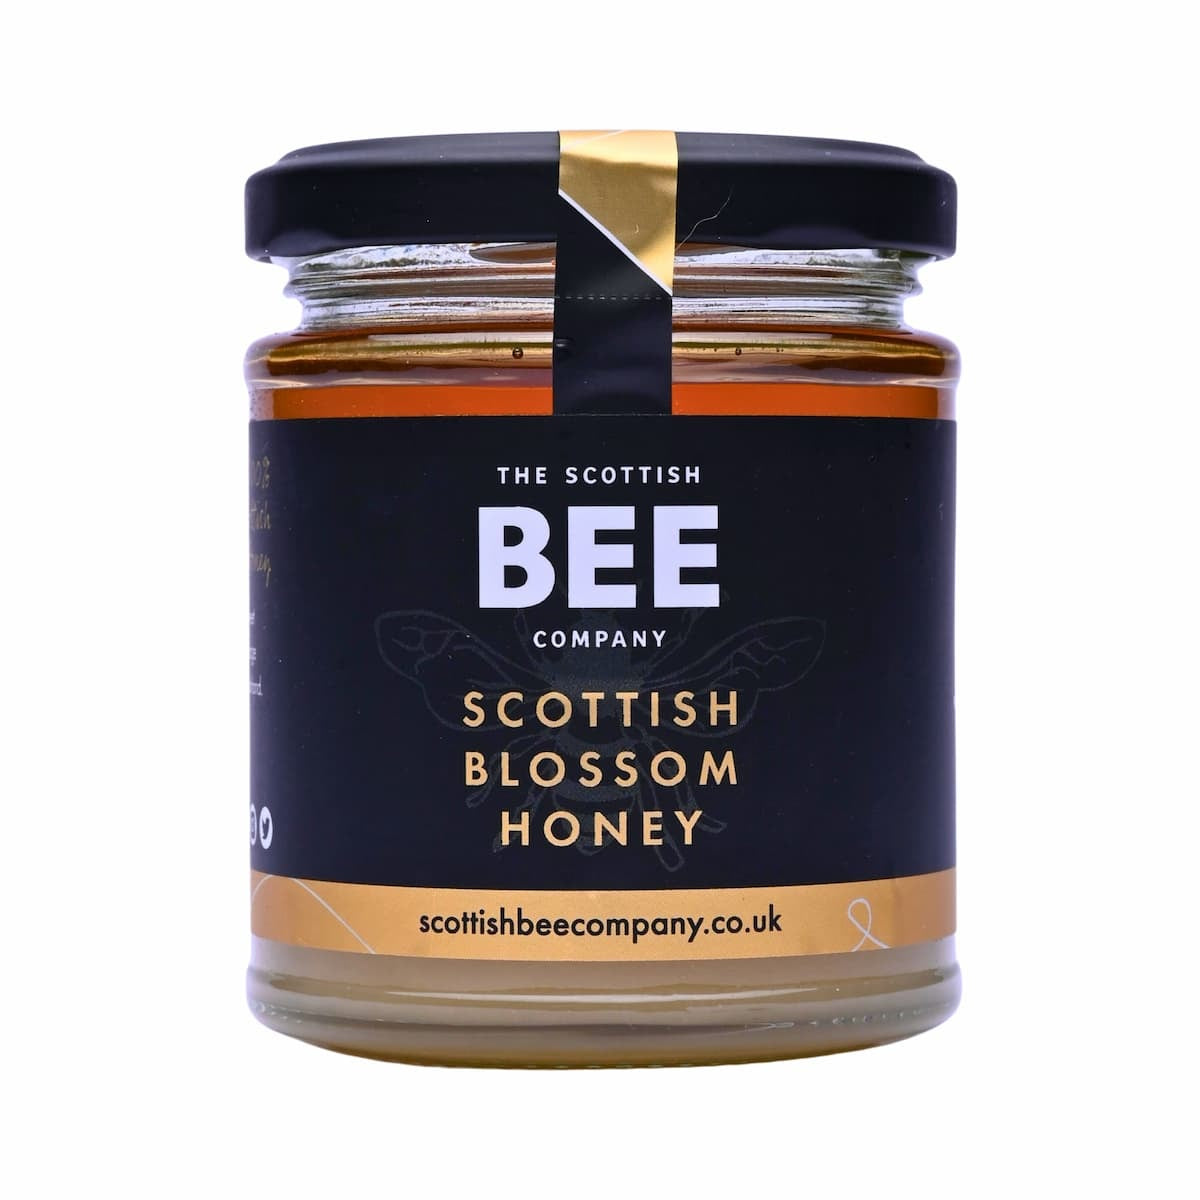 THE SCOTTISH BEE COMPANY Scottish Blossom Honey